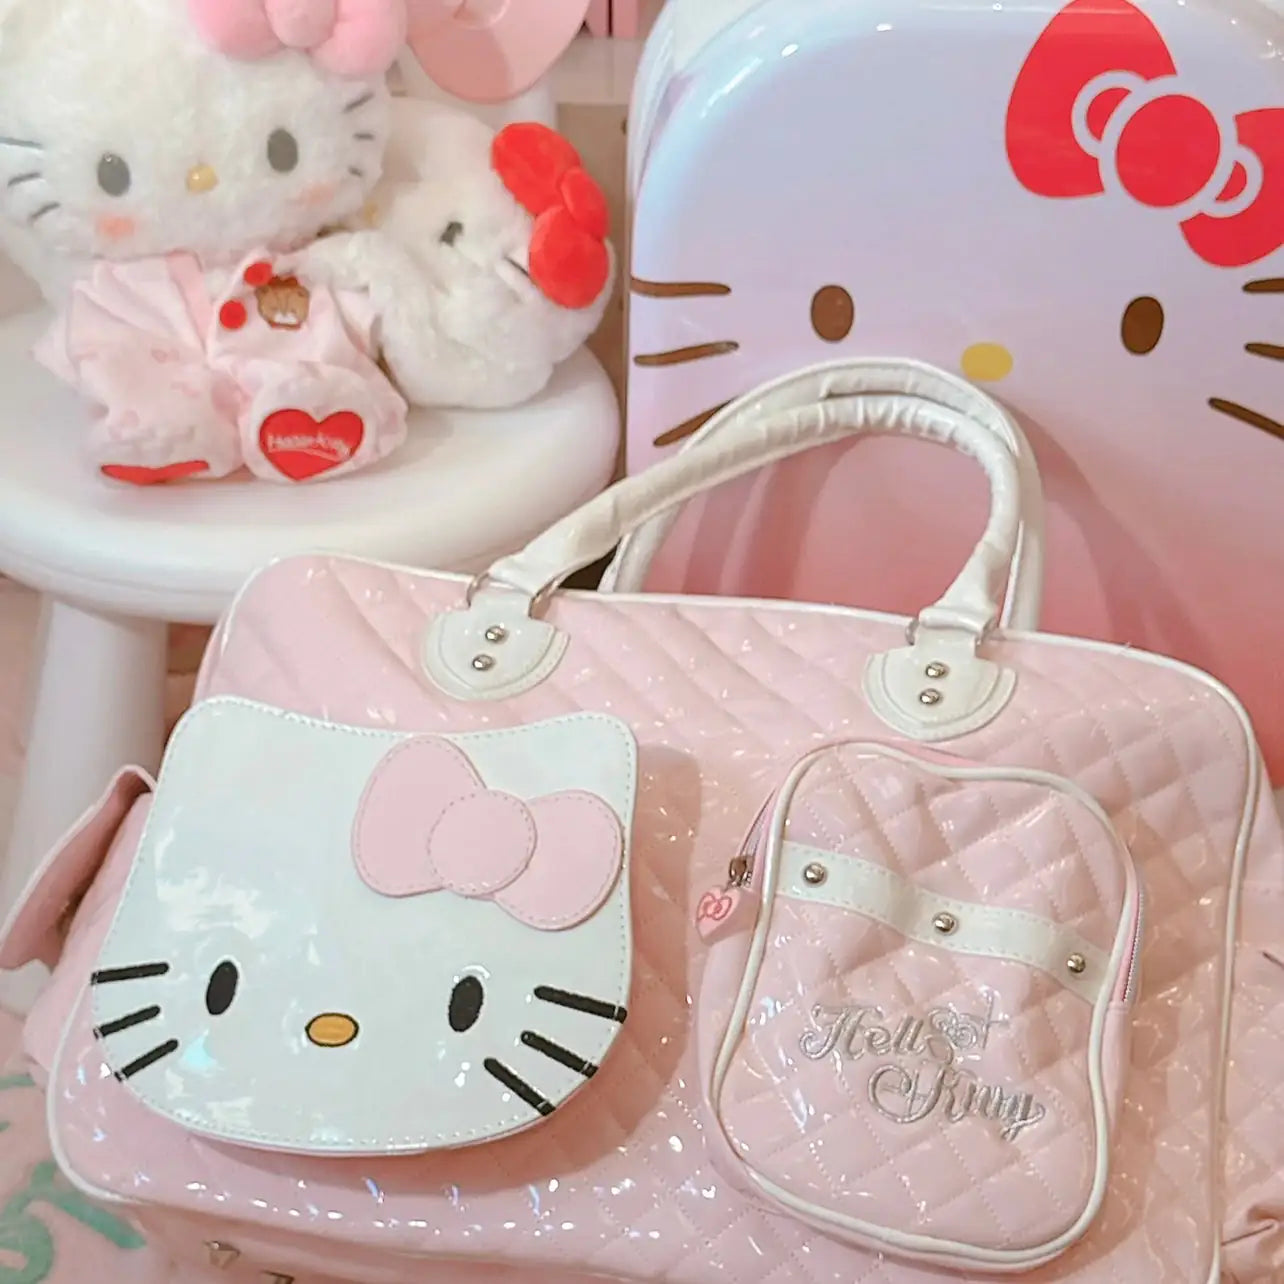 Big Cute Hello Kitty Y2K Handbag Pink